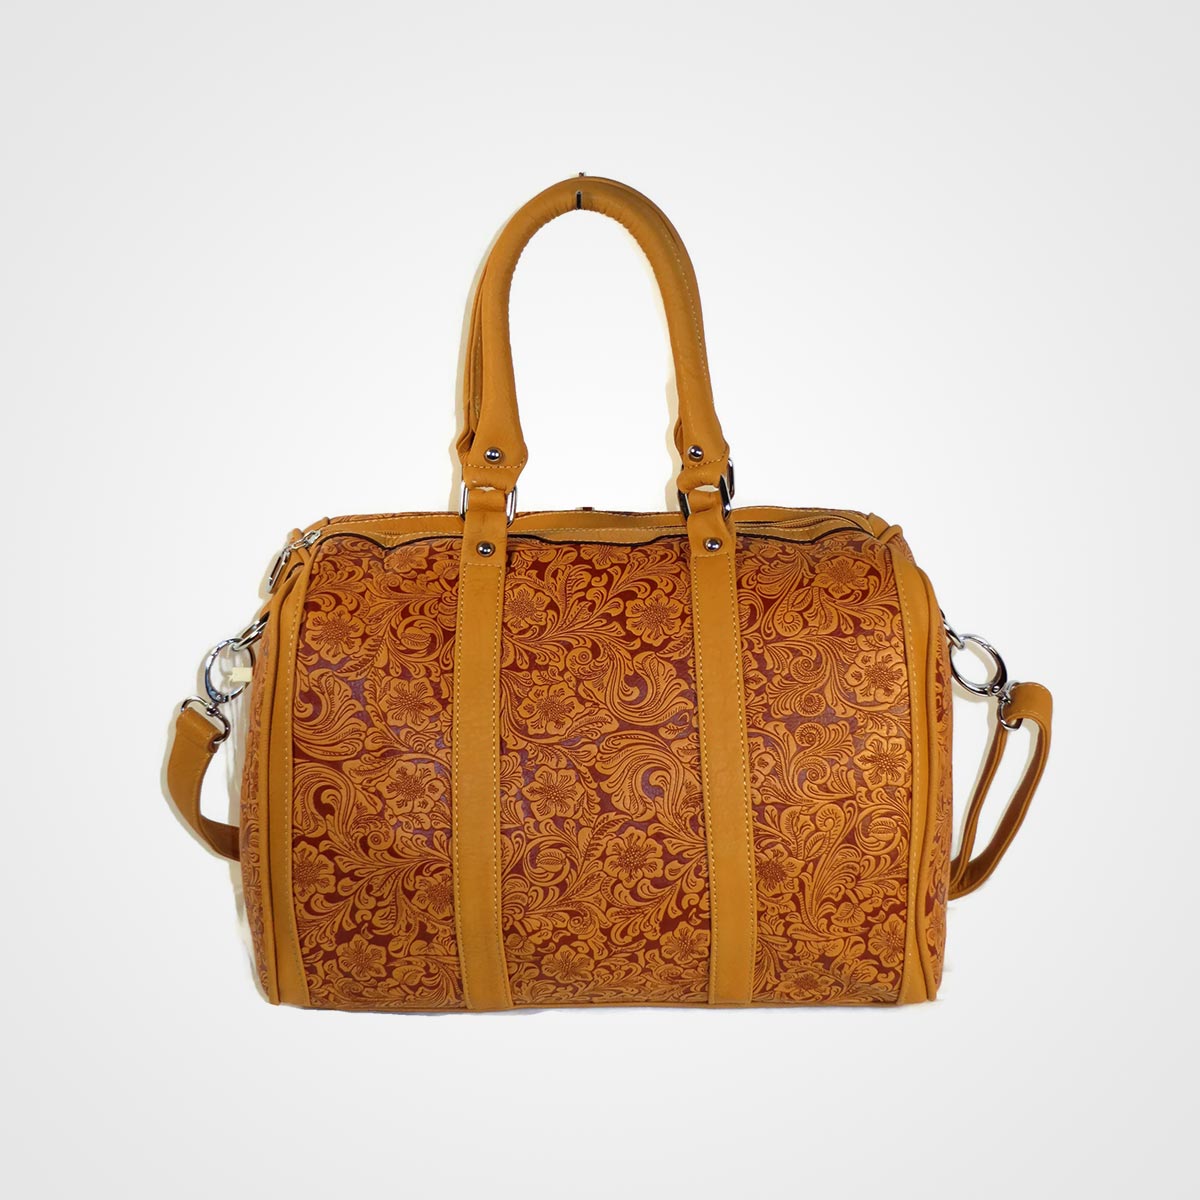 Round basket bag Color golden brown - SINSAY - ZH908-82X